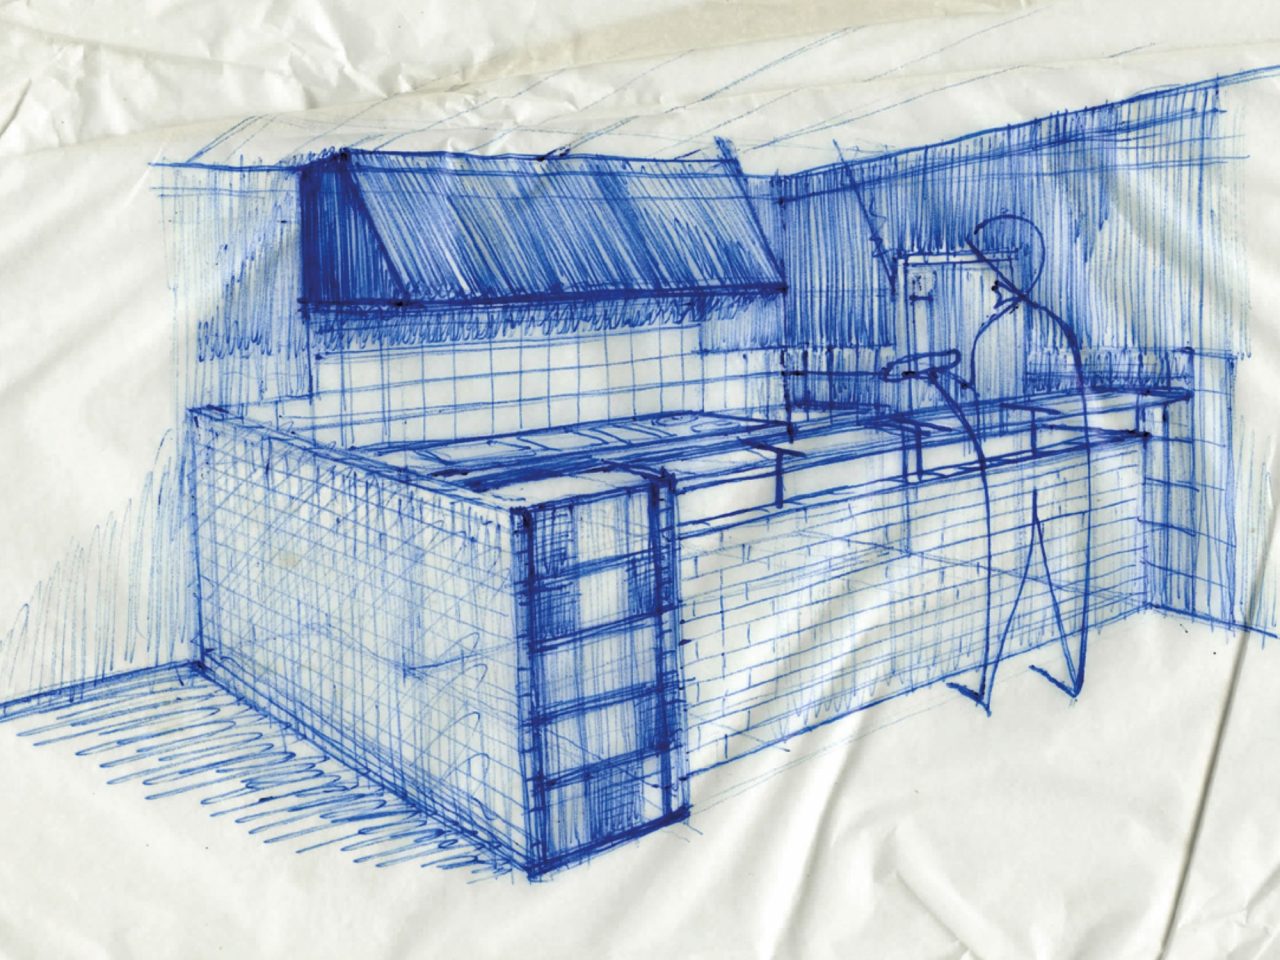 Pen sketch of compact restaurant kitchen.